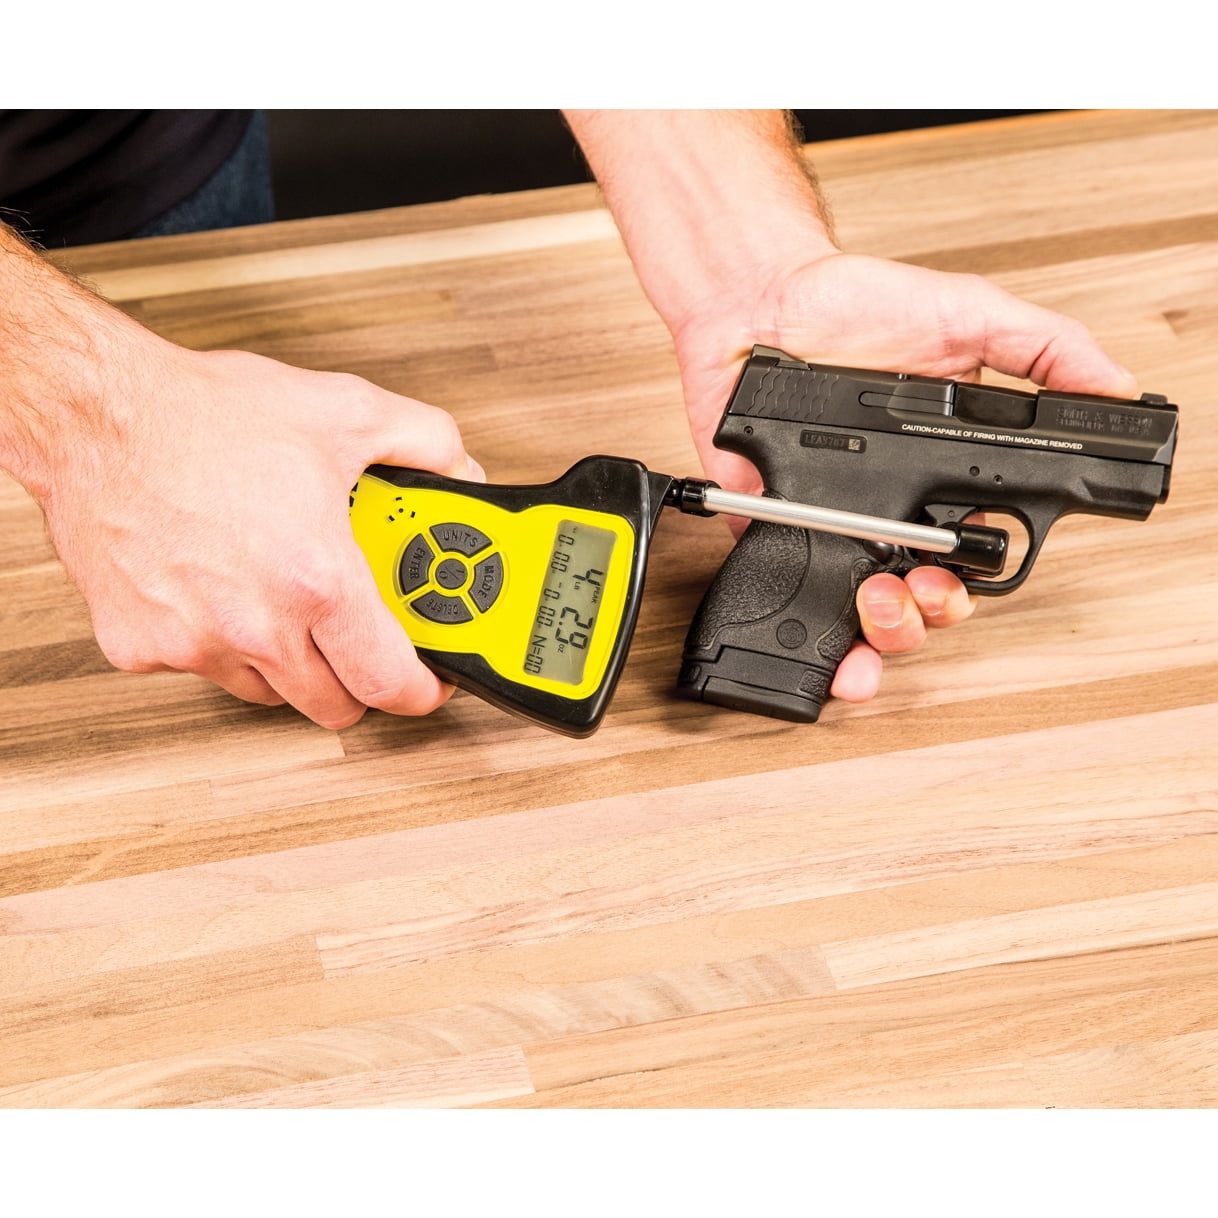 Professional Digital Trigger Pull Gauge with 1 Oz Increments & Digital Display 